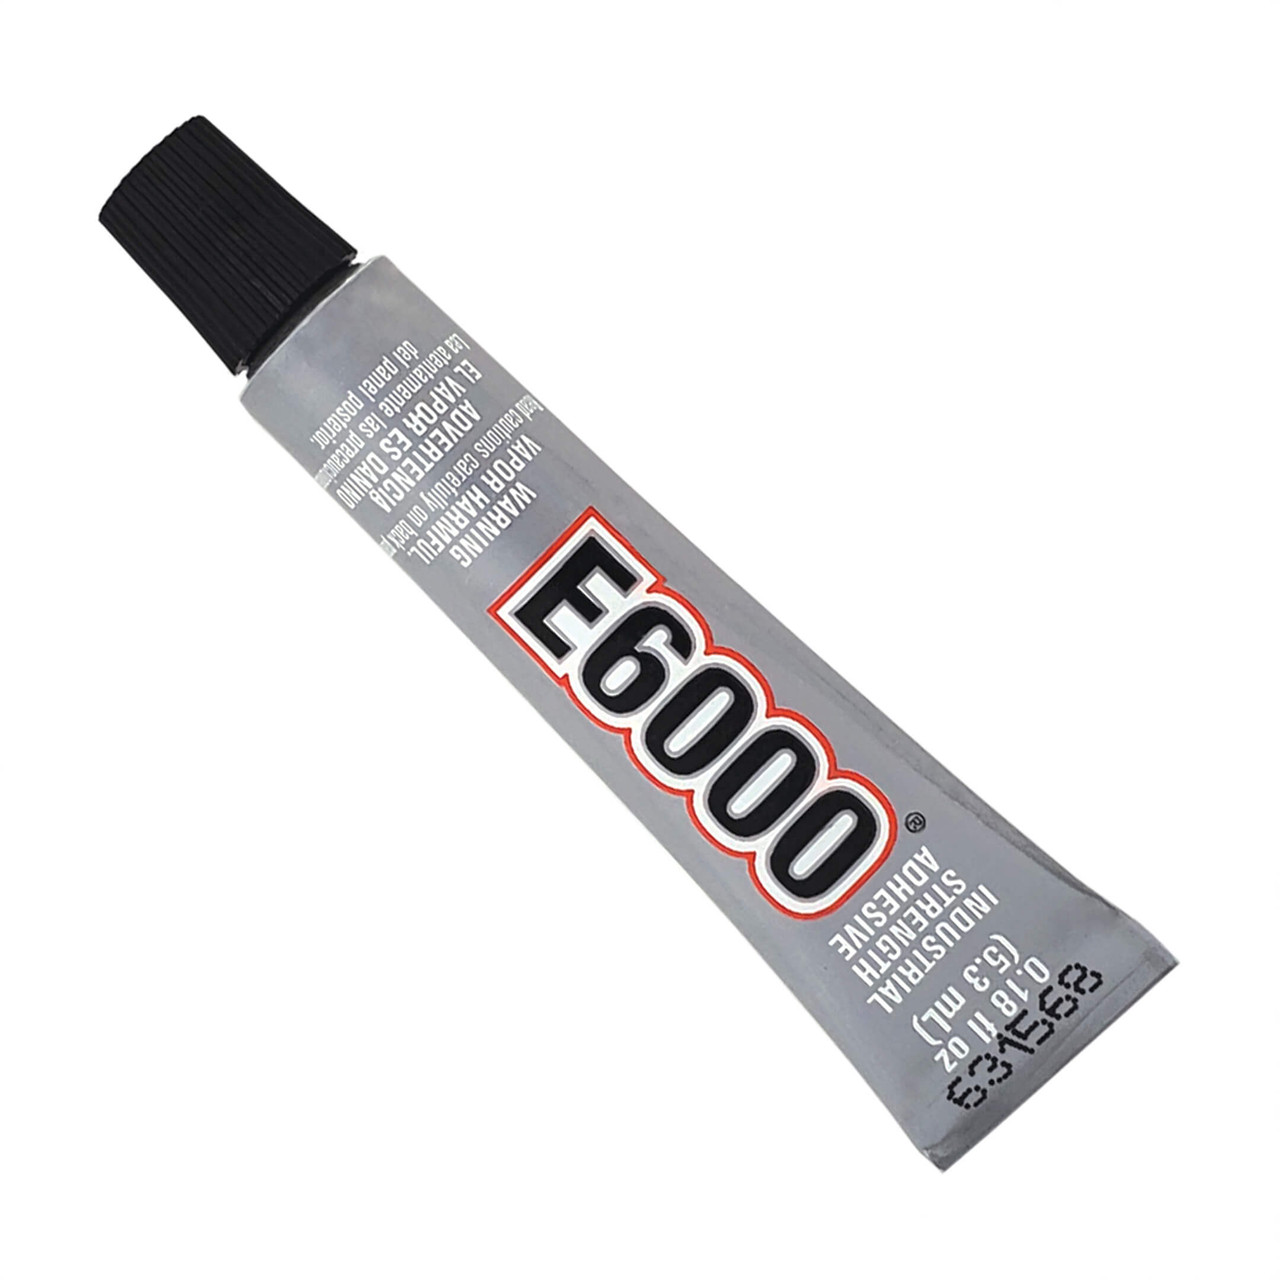 E6000 Adhesive Glue, Multi-purpose Industrial Strength, 1 Tube - 3.7 fl Oz